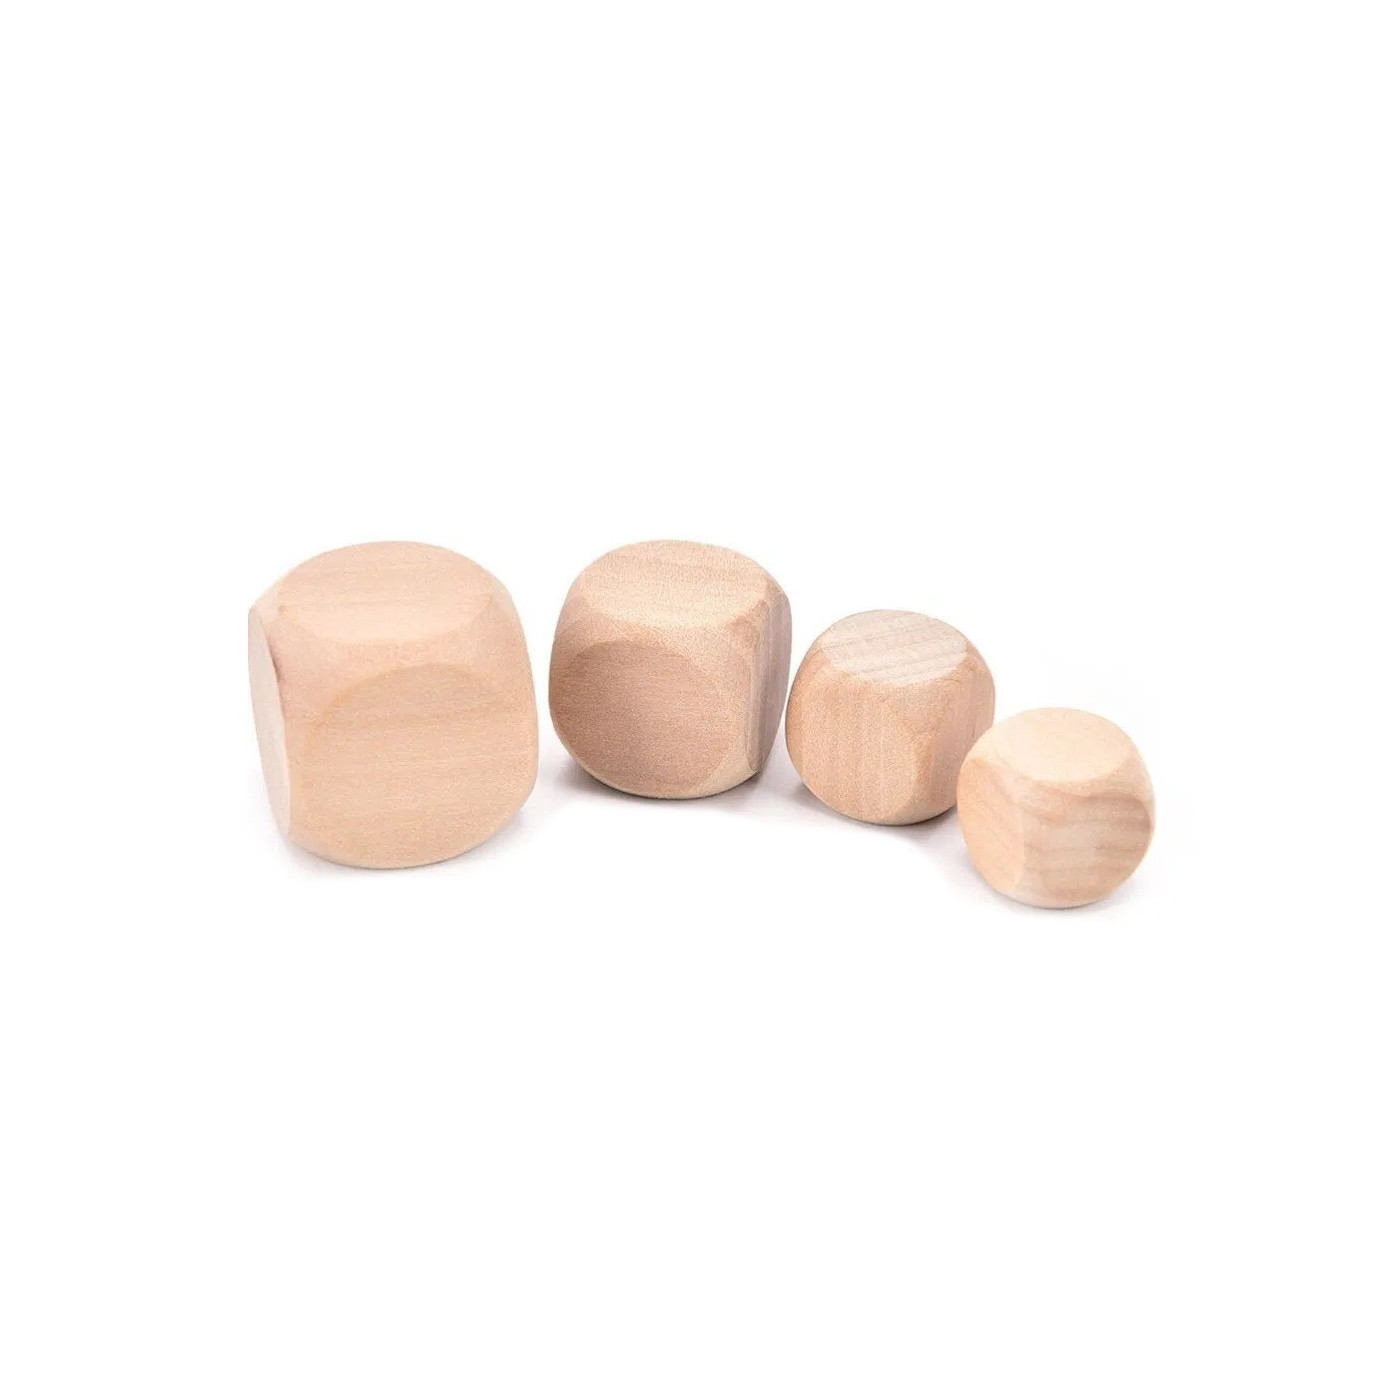 Set of 100 wooden cubes (dice), size: medium (10 mm)